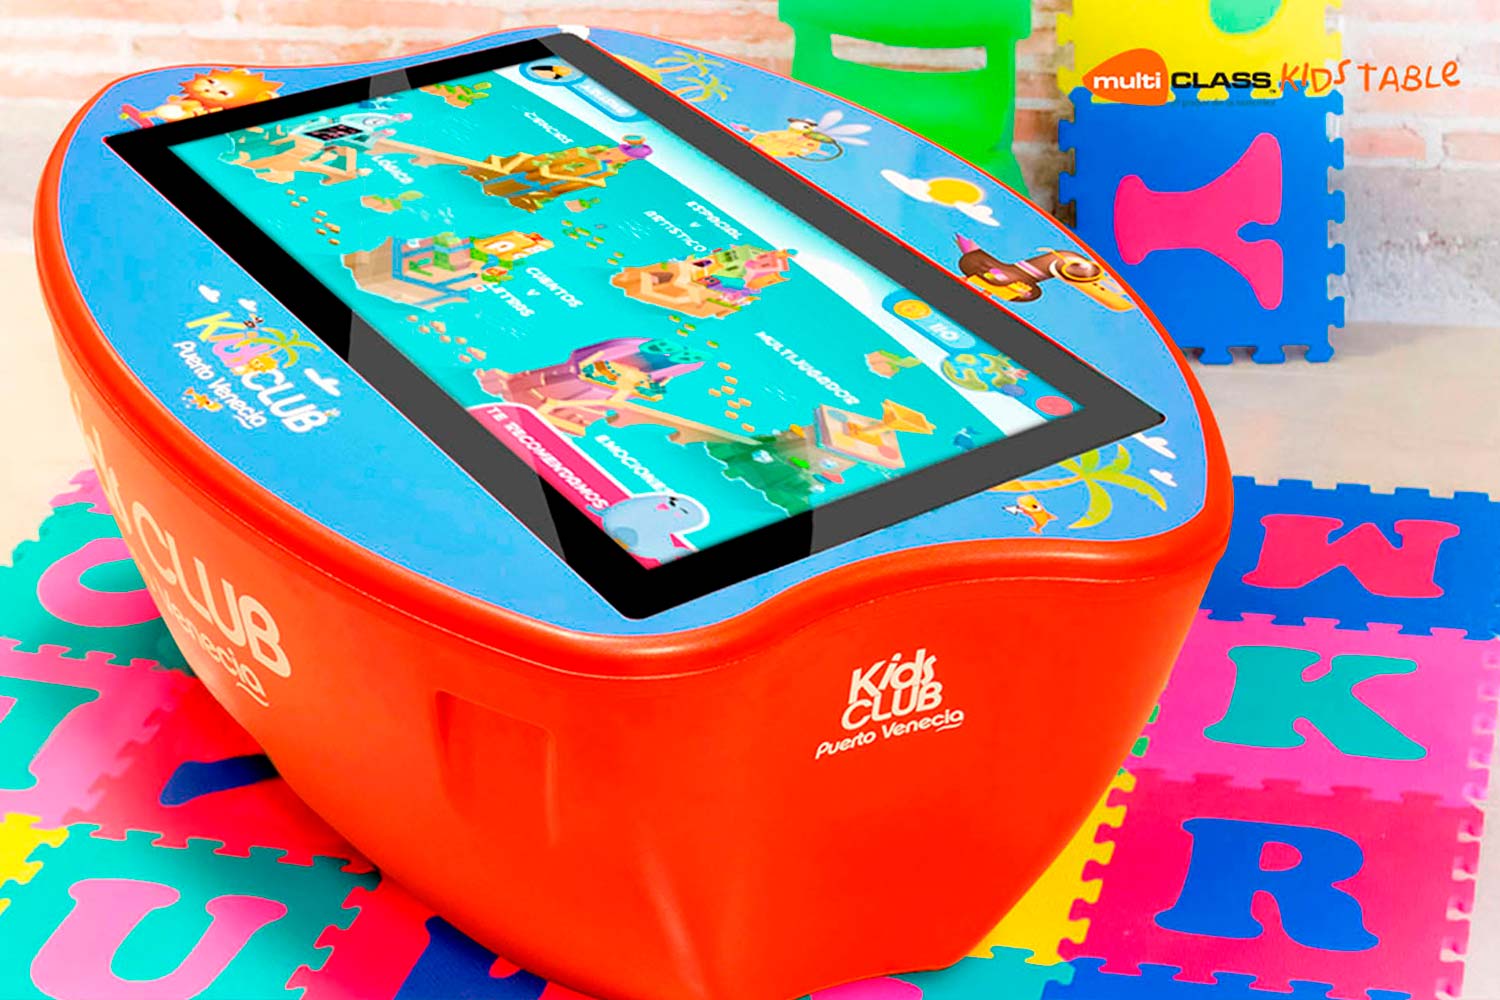 Touchscreen table multiCLASS Kids Table Kids Corners